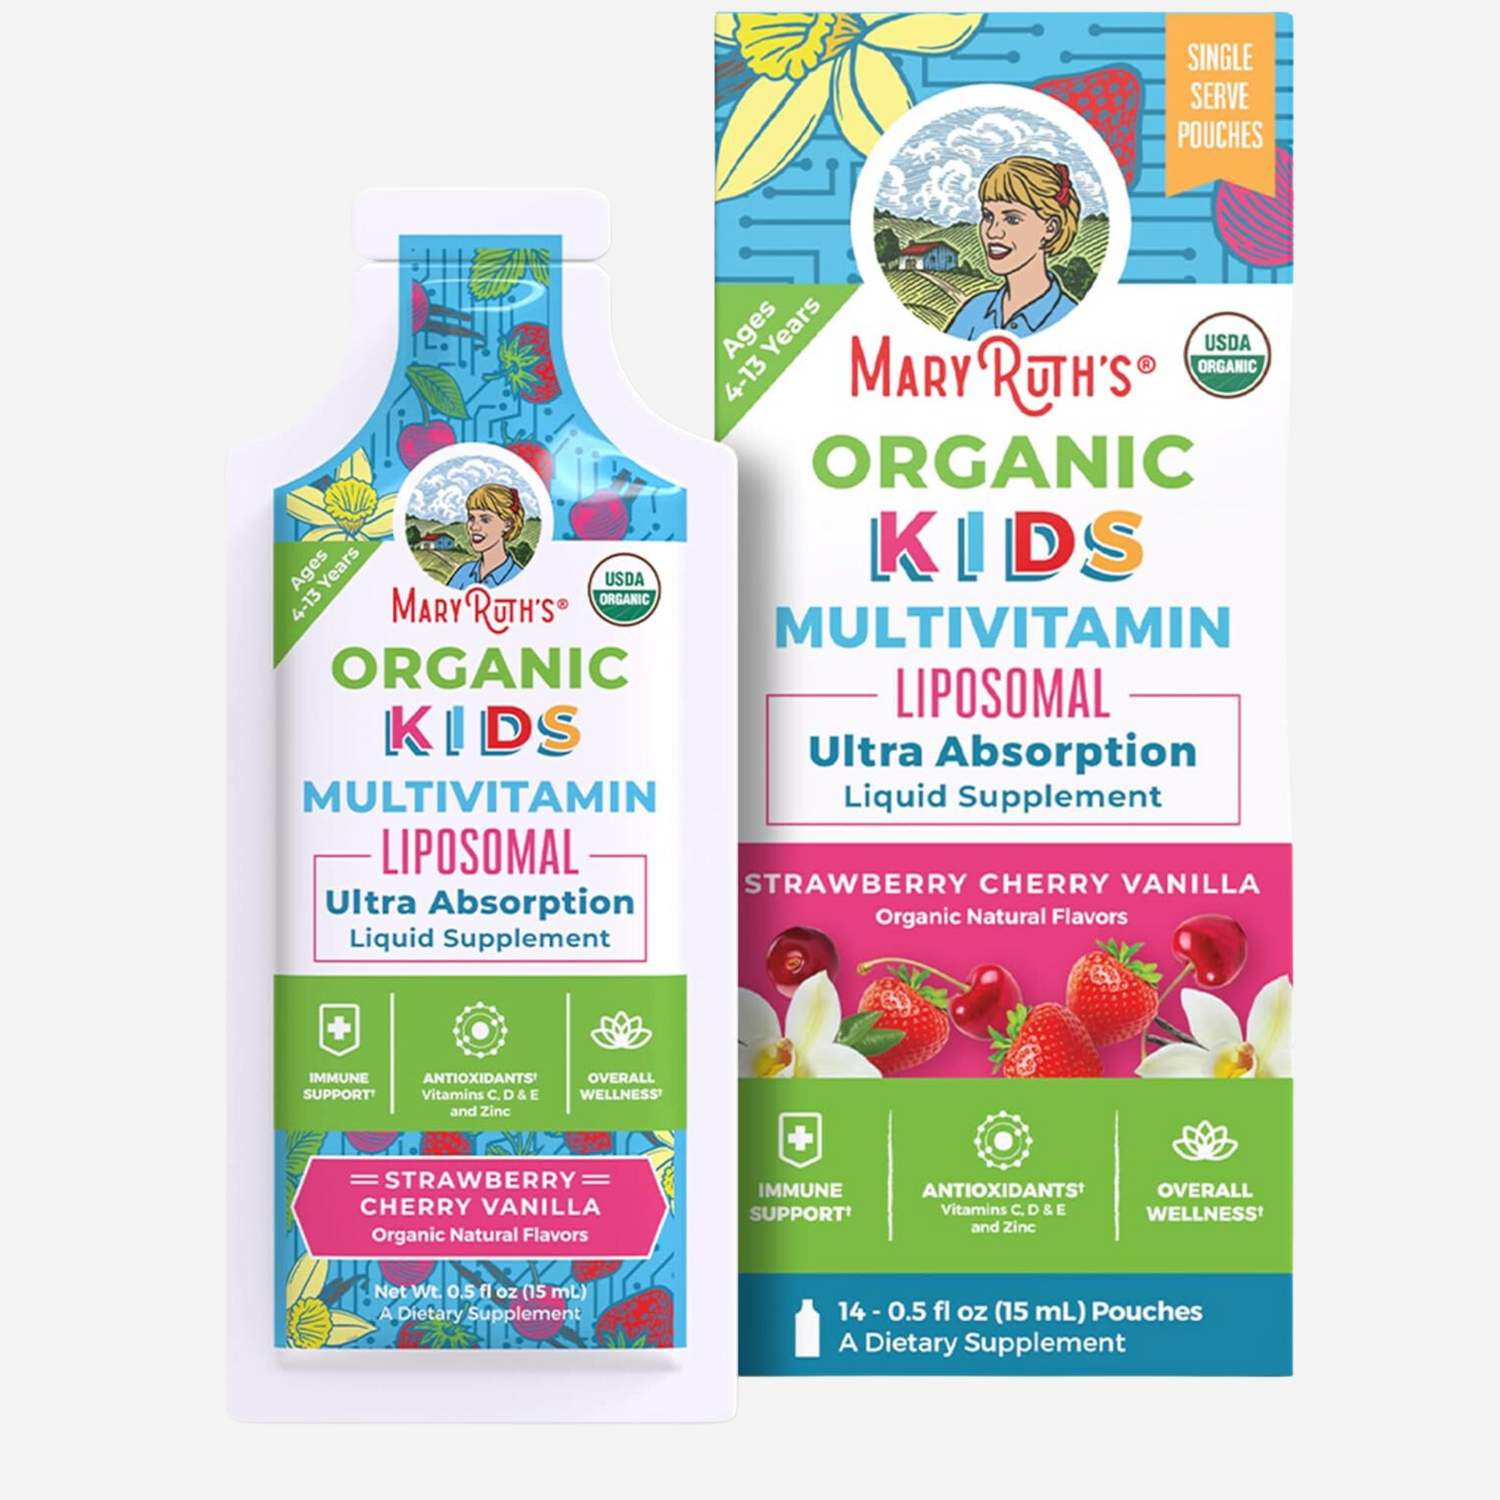 MaryRuth Organics Vitamin USDA, Sugar Free Kids Multivitamin Liquid, Immune Support Supplement 14-0.5 Fl Oz Pouches, Pack of 1